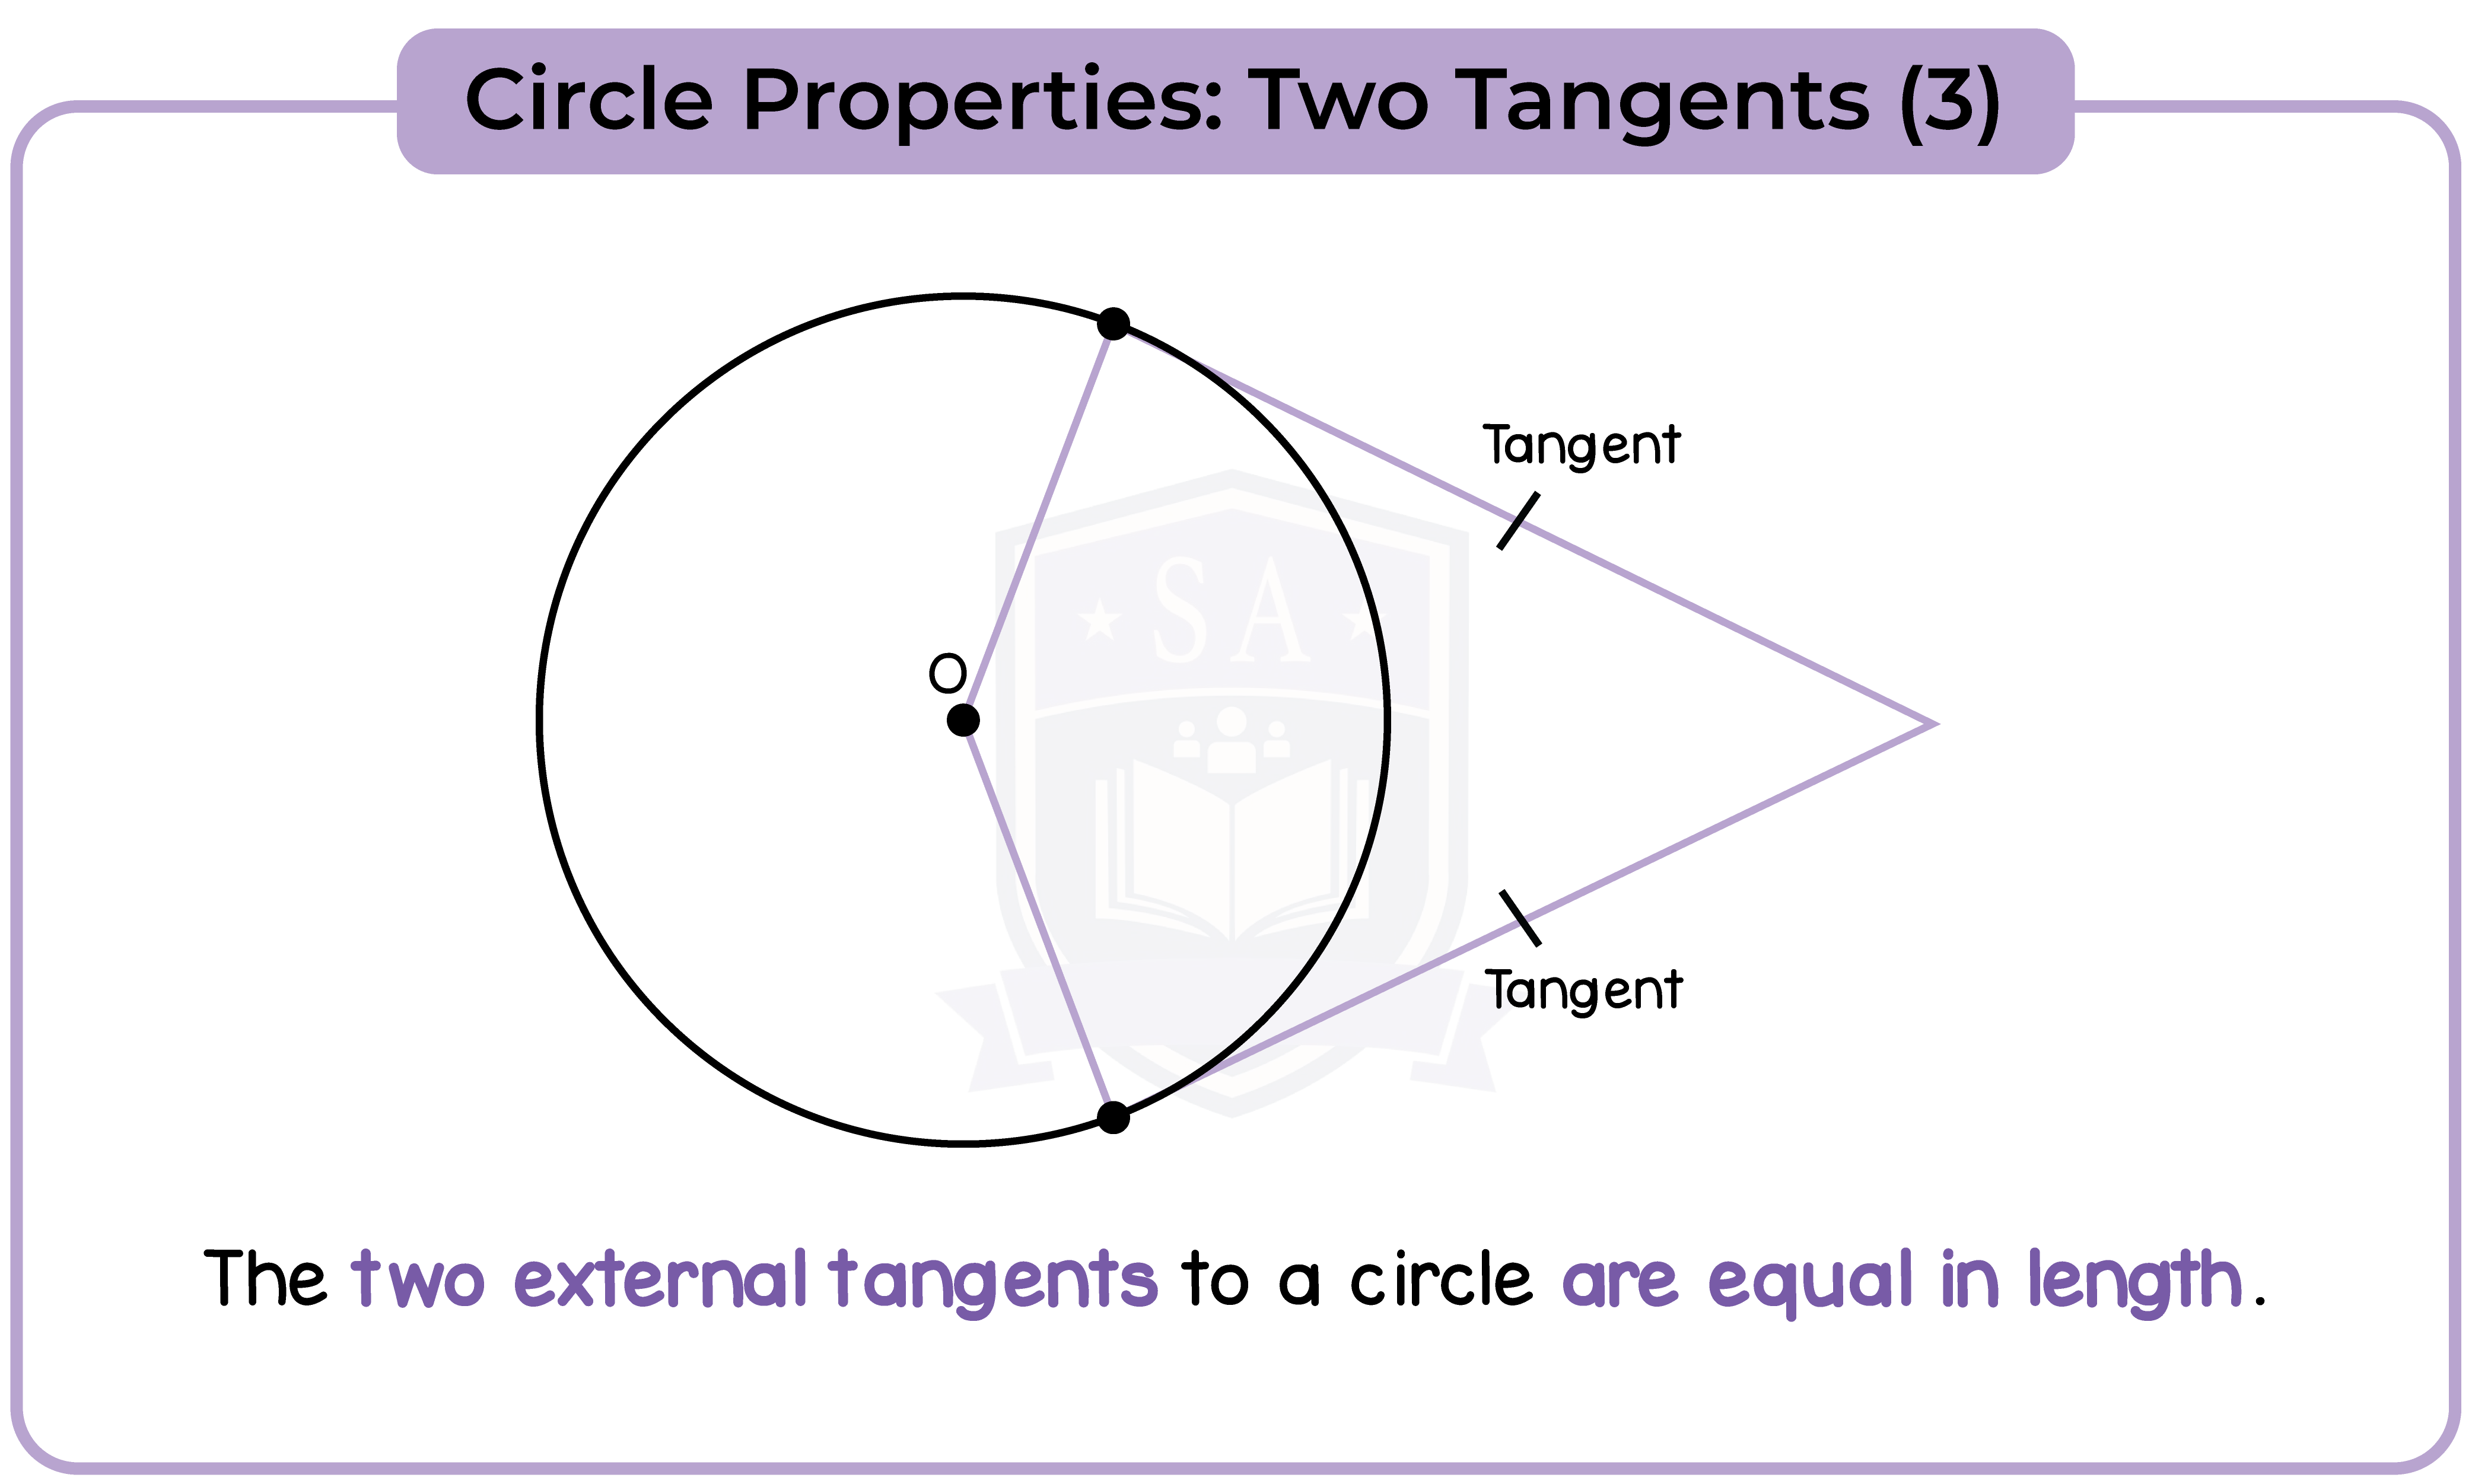 edexcel_igcse_mathematics a_topic 30_circle properties_004_Circle Properties: Two Tangents (3)